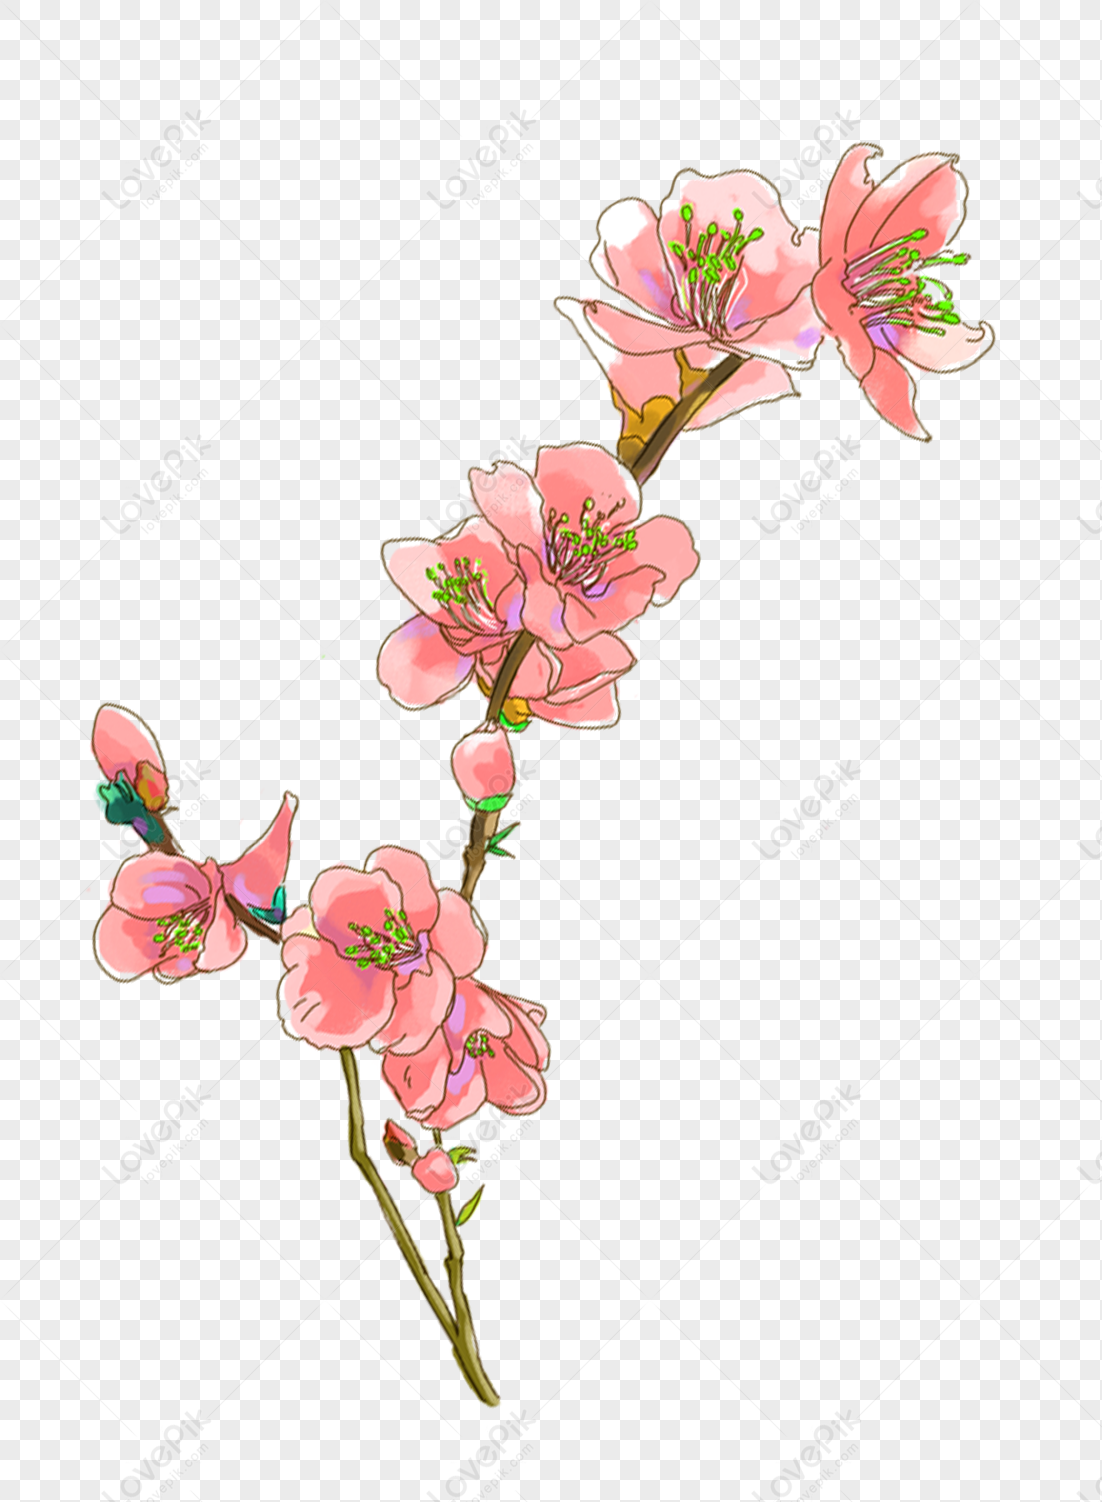 Flower, Flower Transparent, Flower Flowers, Flower Light PNG